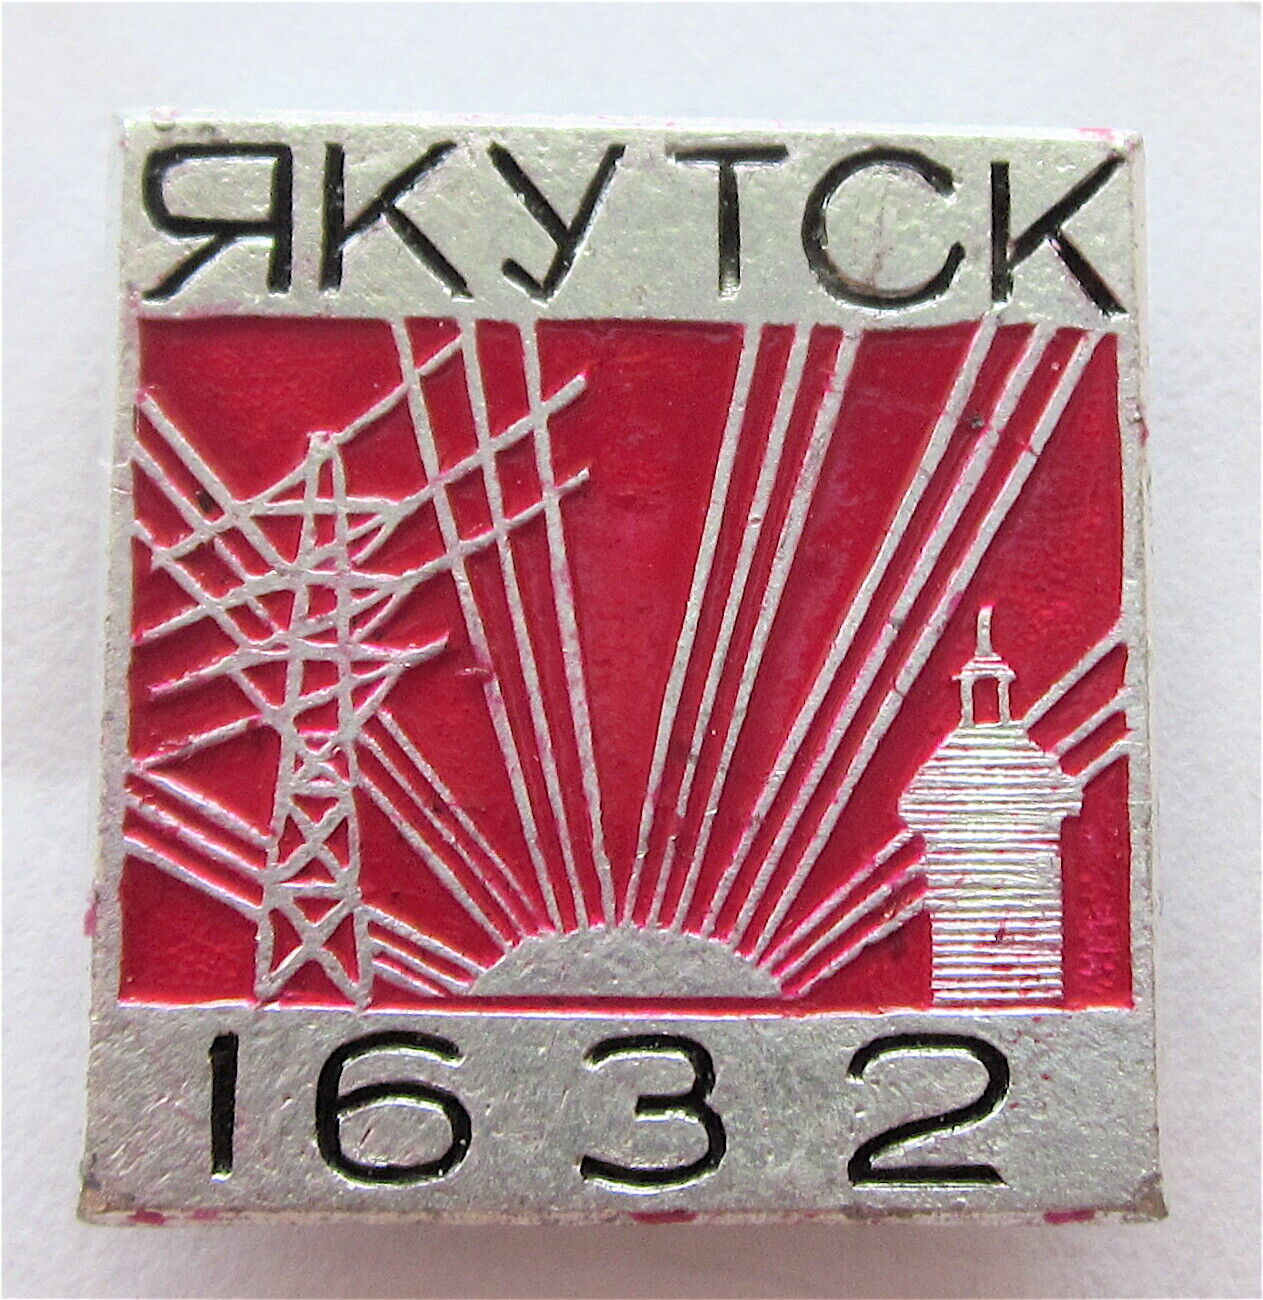 RUSSIA SIBERIA, YAKUTSK CITY WAS FOUNDED IN 1632, CAPITAL OF SAKHA REPUBLIK PIN